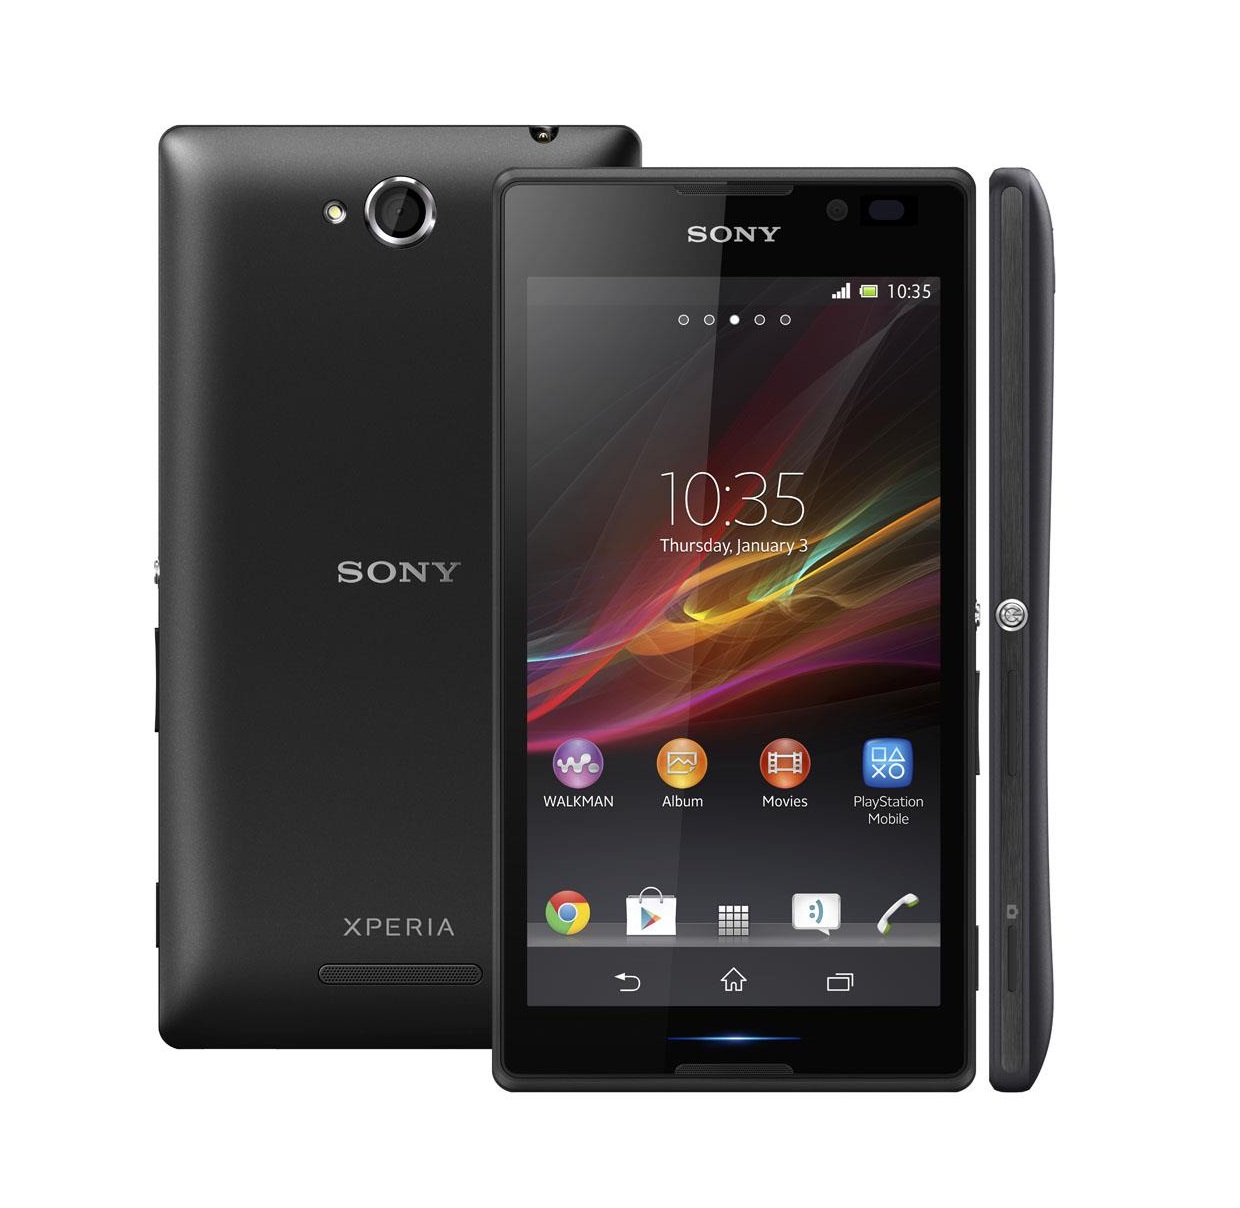 Характеристика xperia v. Sony Xperia c2105. Sony Xperia 1 v. Sony Ericsson Xperia l. Sony Xperia v89.